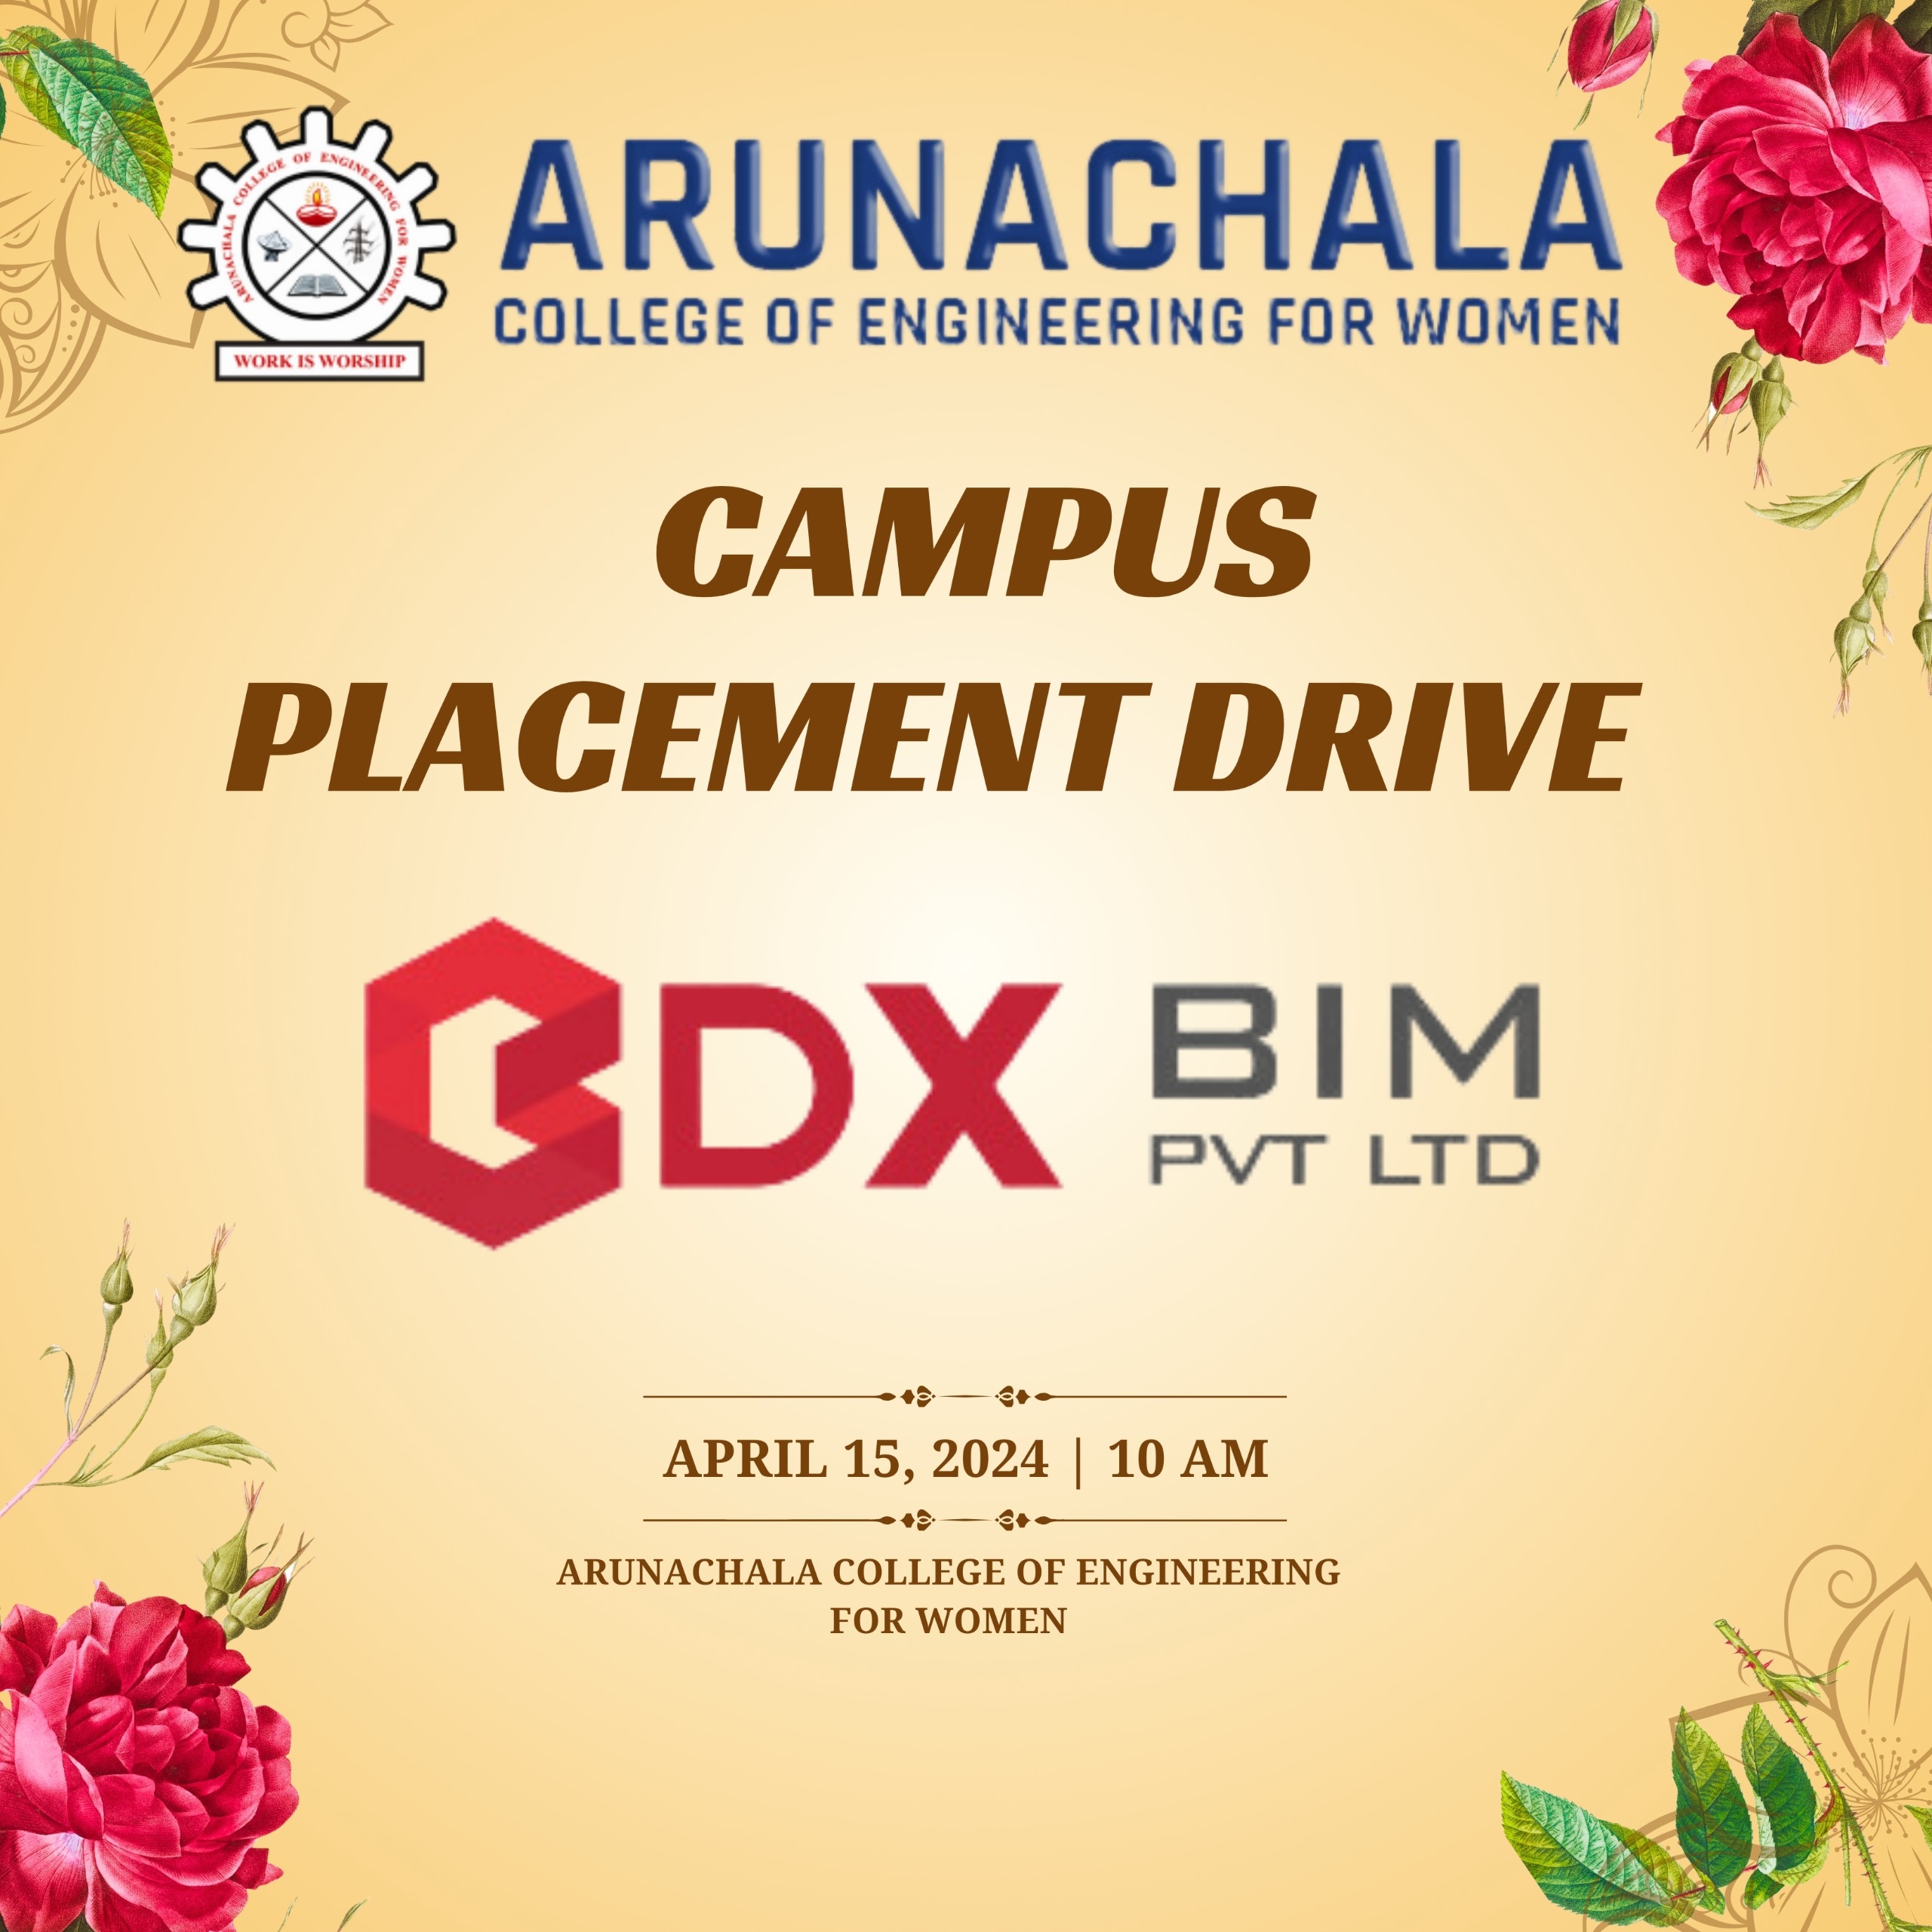 Placement Drive: BDX Bim Pvt Ltd